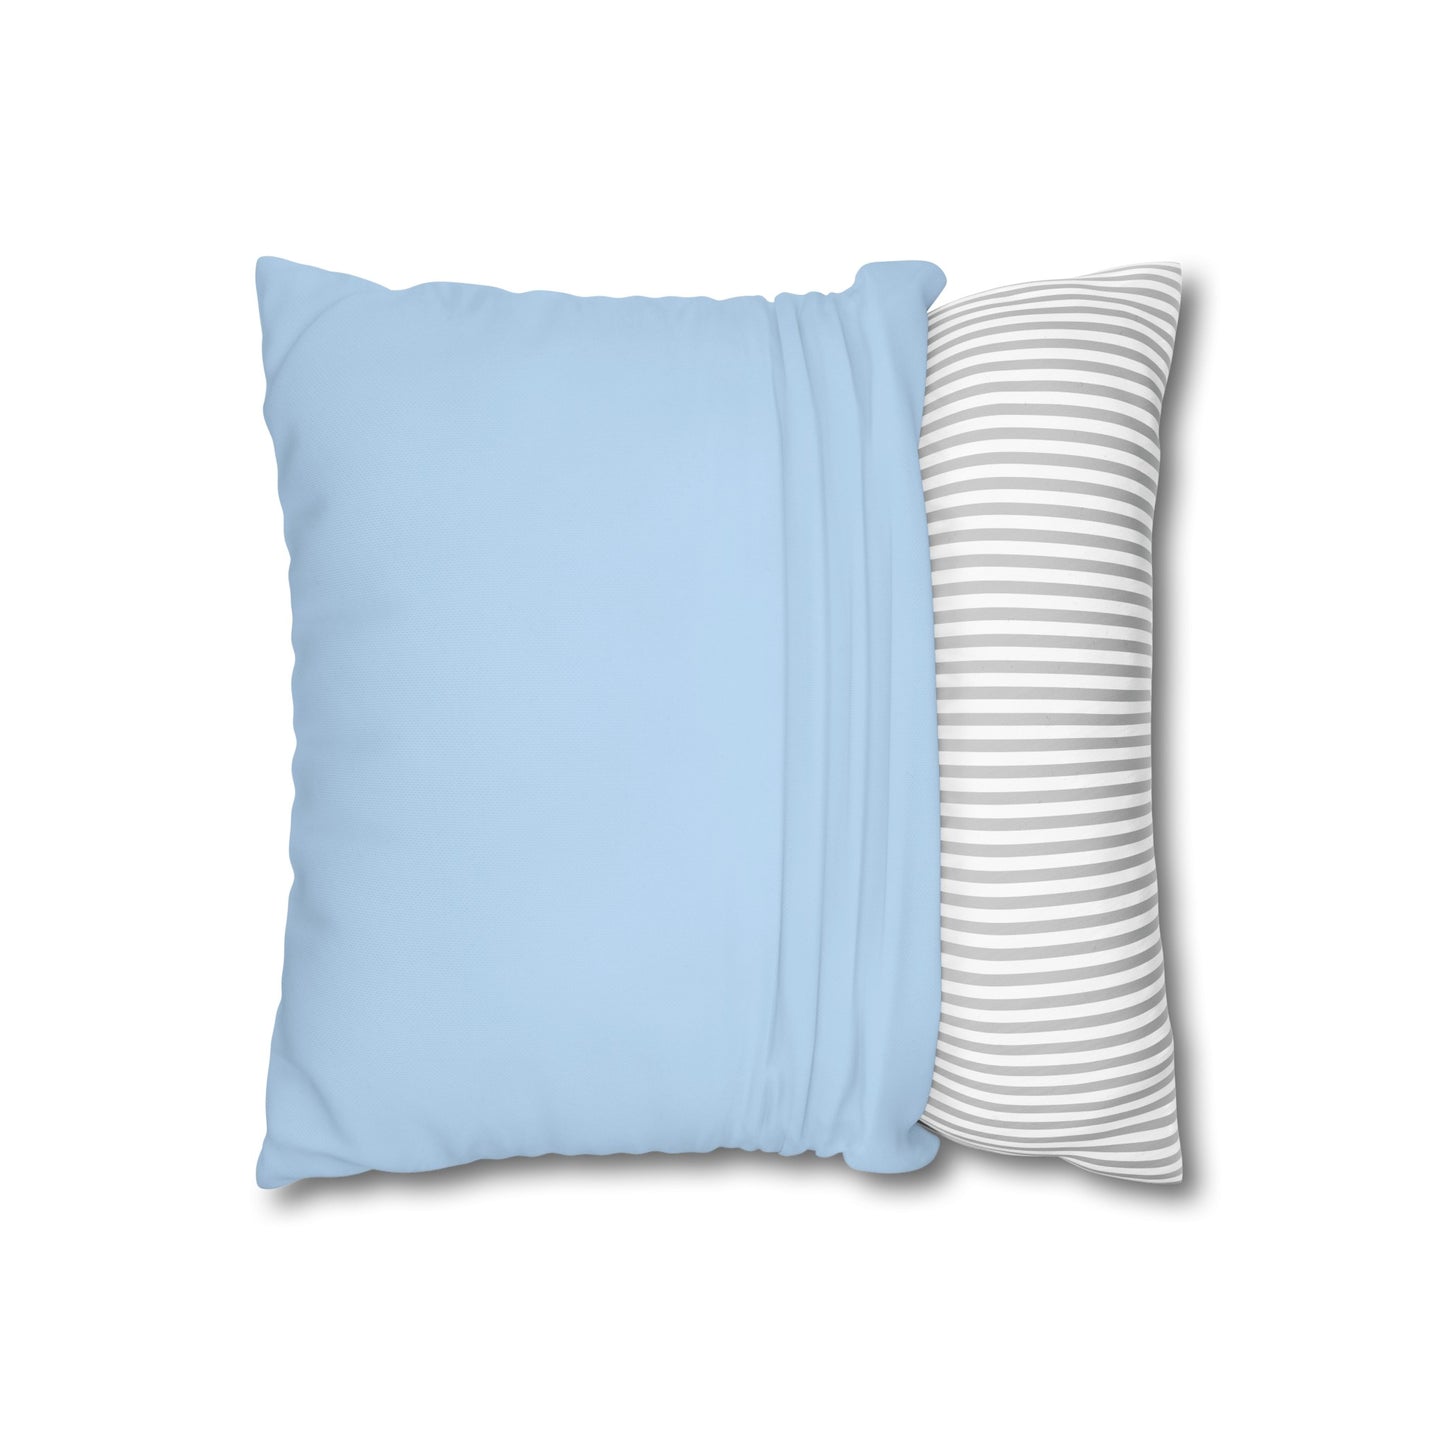 Pink & Blue Hydrangea #3 Cushion Cover